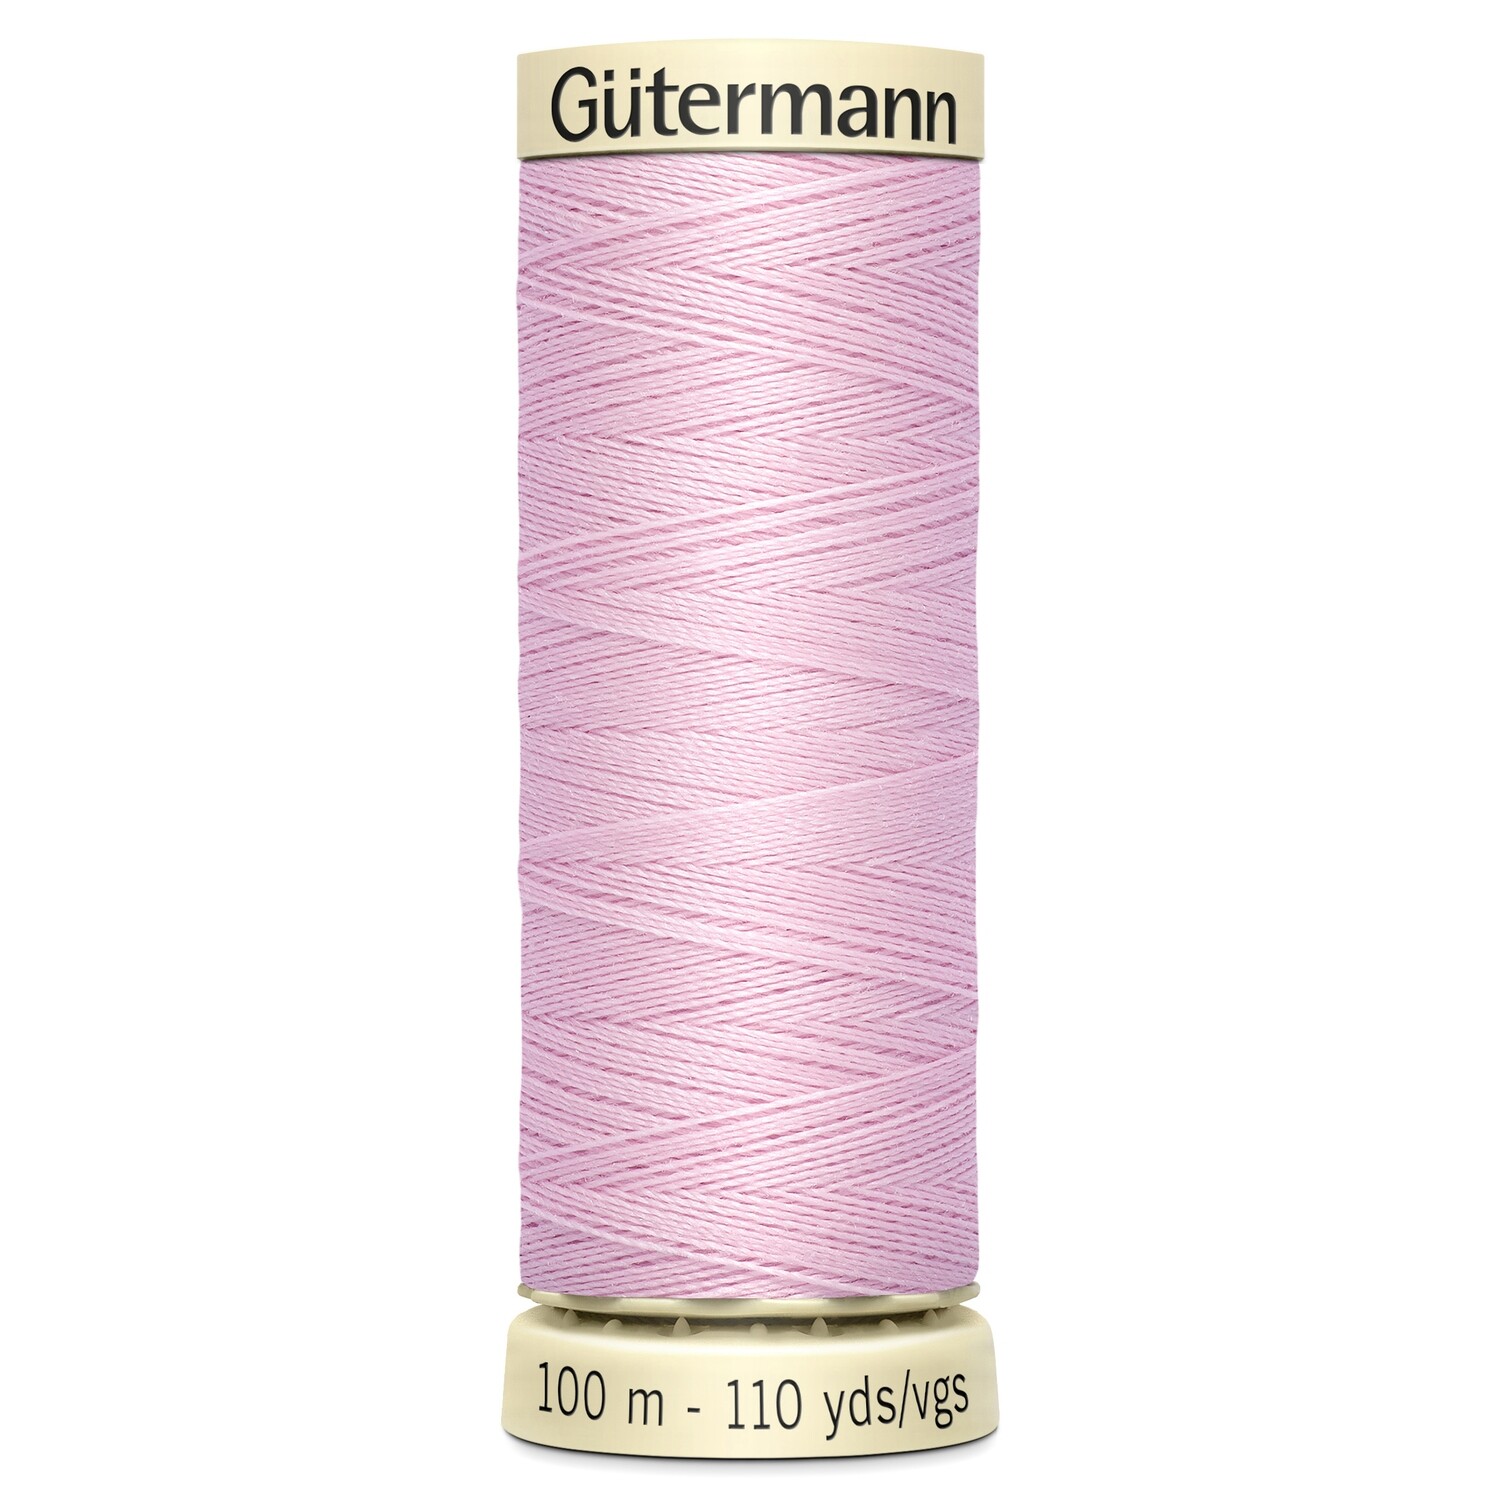 Gutermann Sew-All thread 320